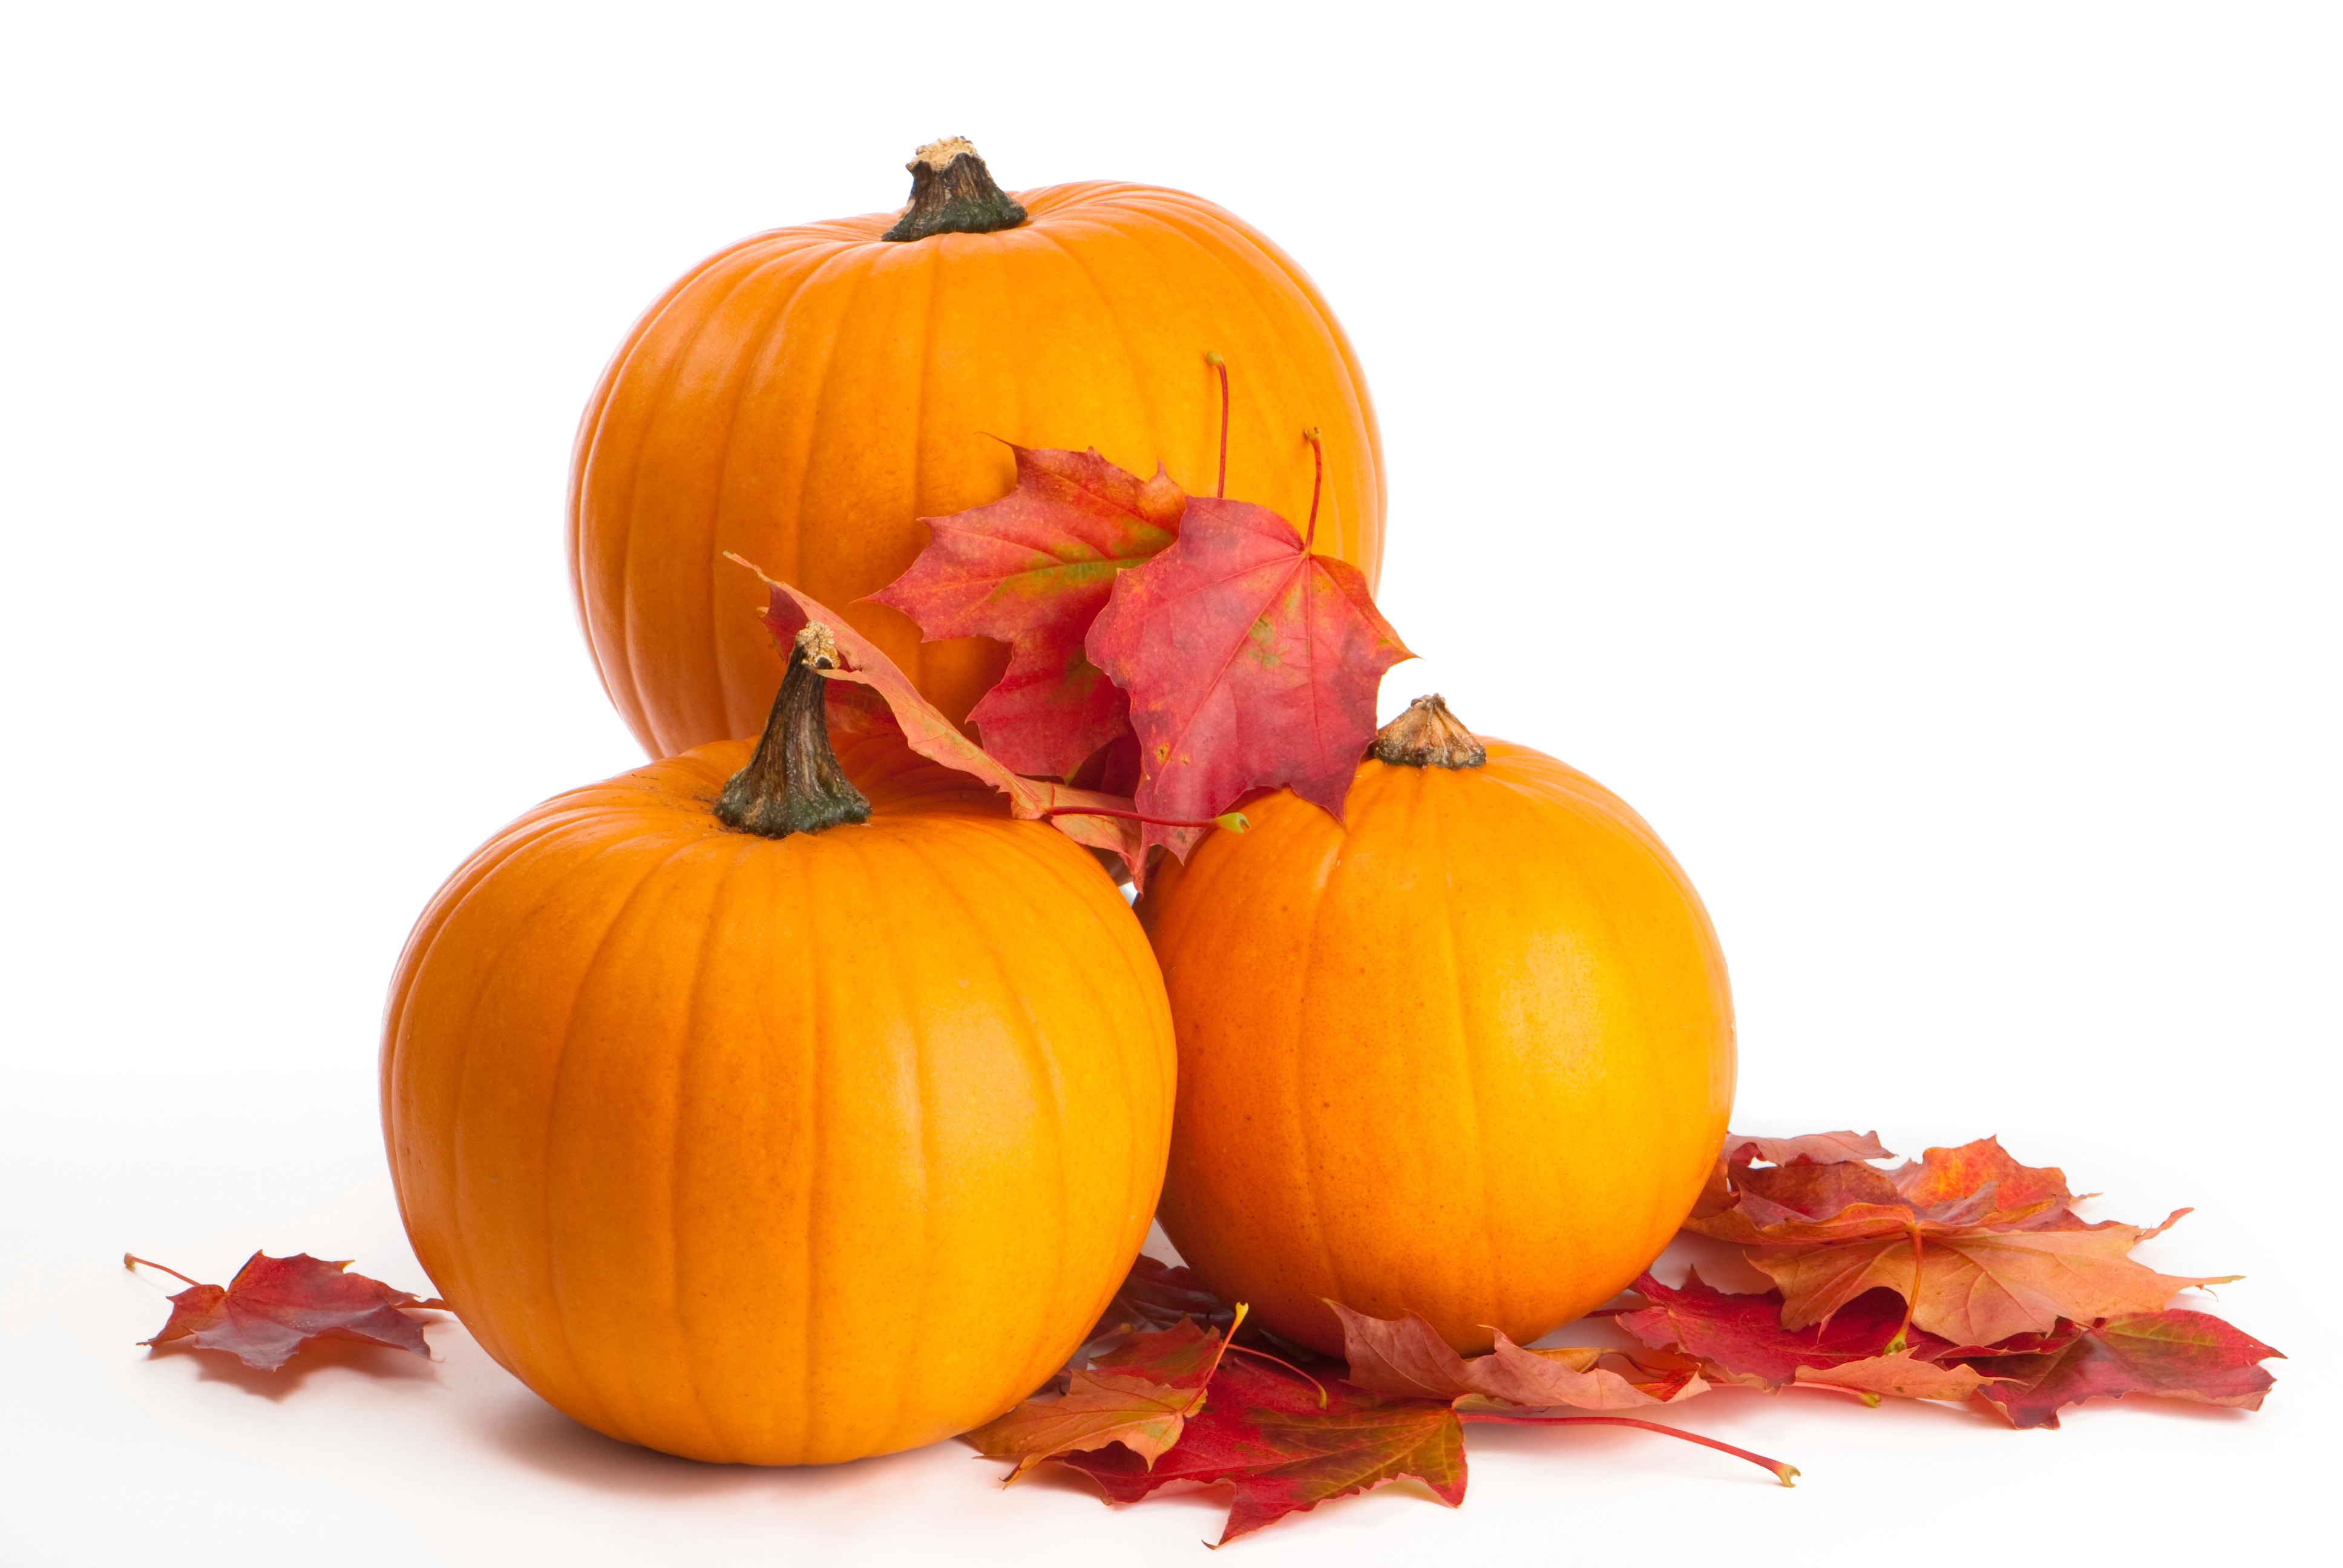 Pumpkin preparation tips — 'so smart!' — for Halloween and the fall season